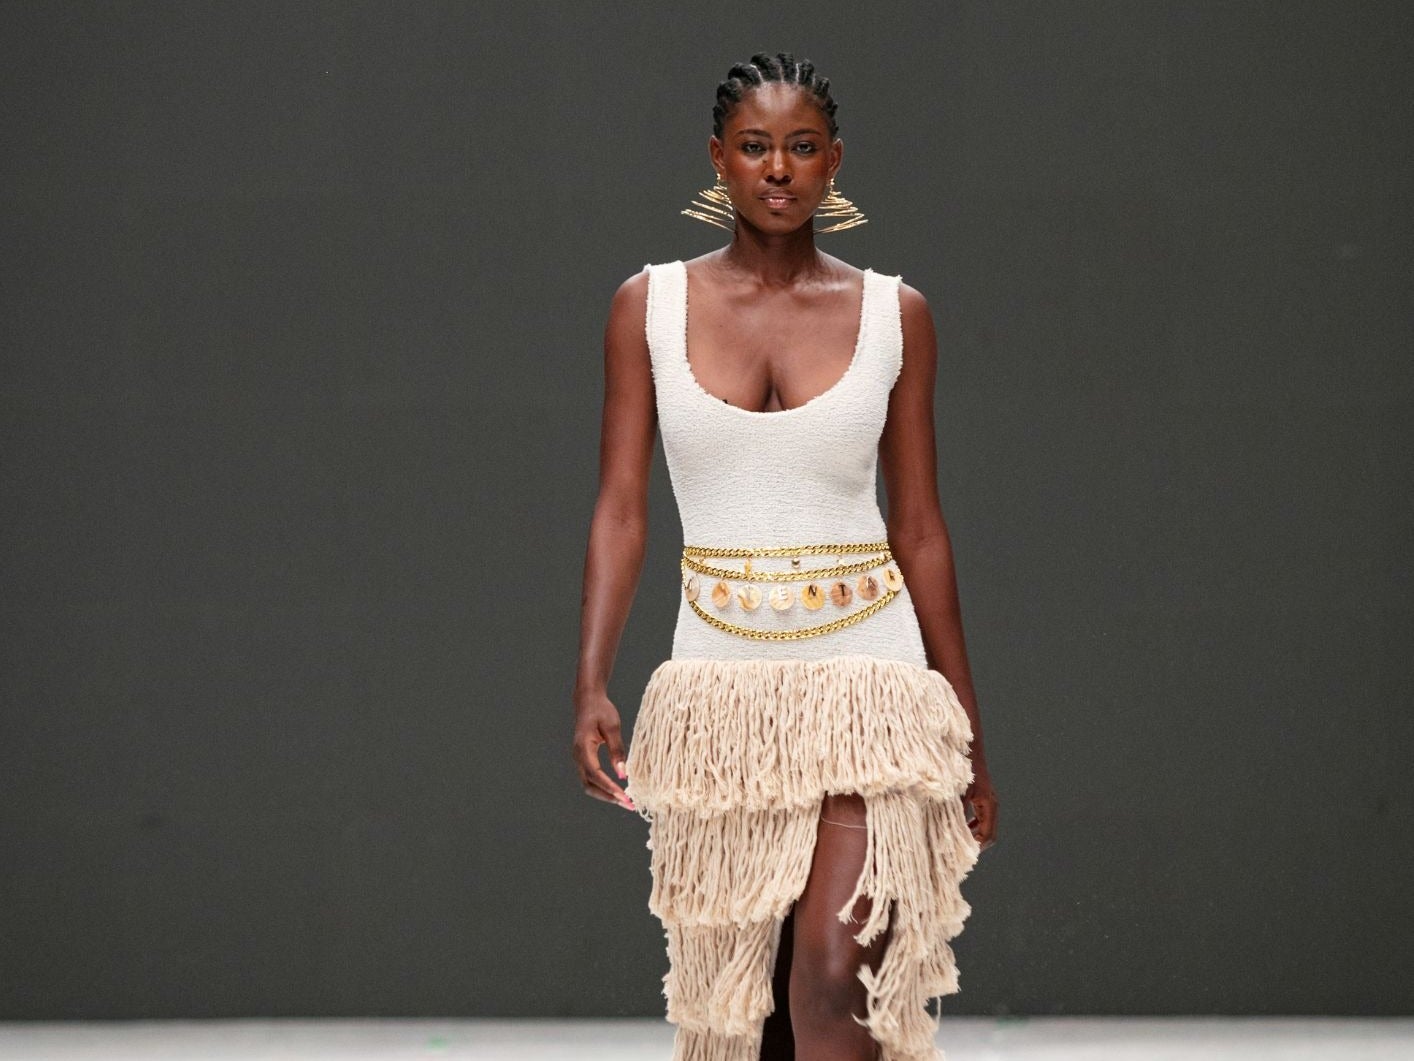 The Yoruba Heritage Is The Through Line Of Michelle Adepoju’s Brand Kíléntár